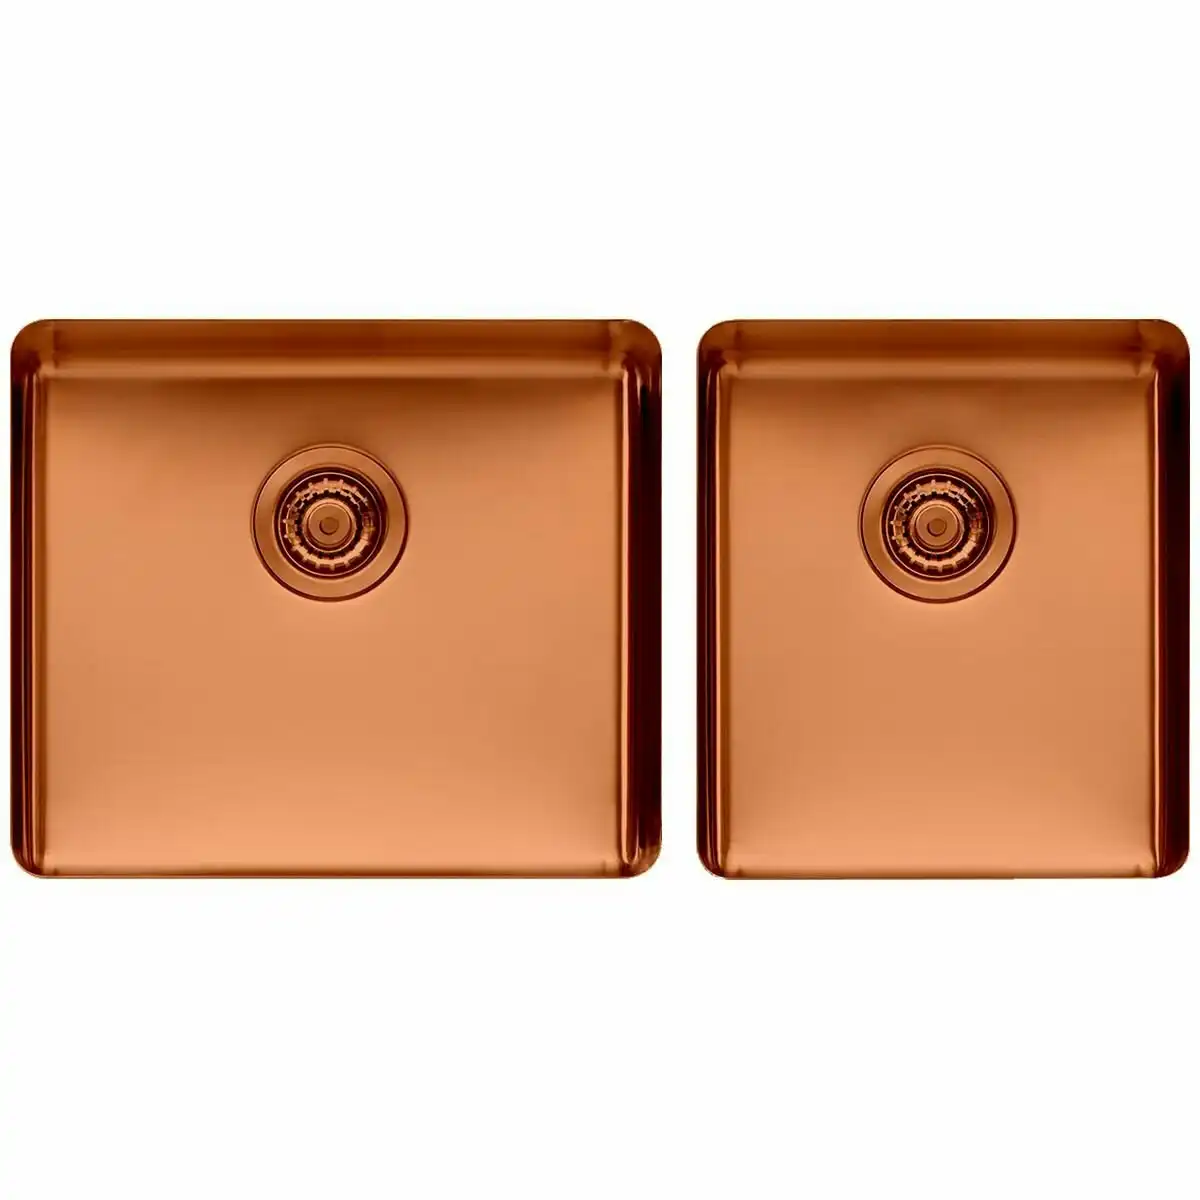 Titan large and Medium Bowl Sink Copper